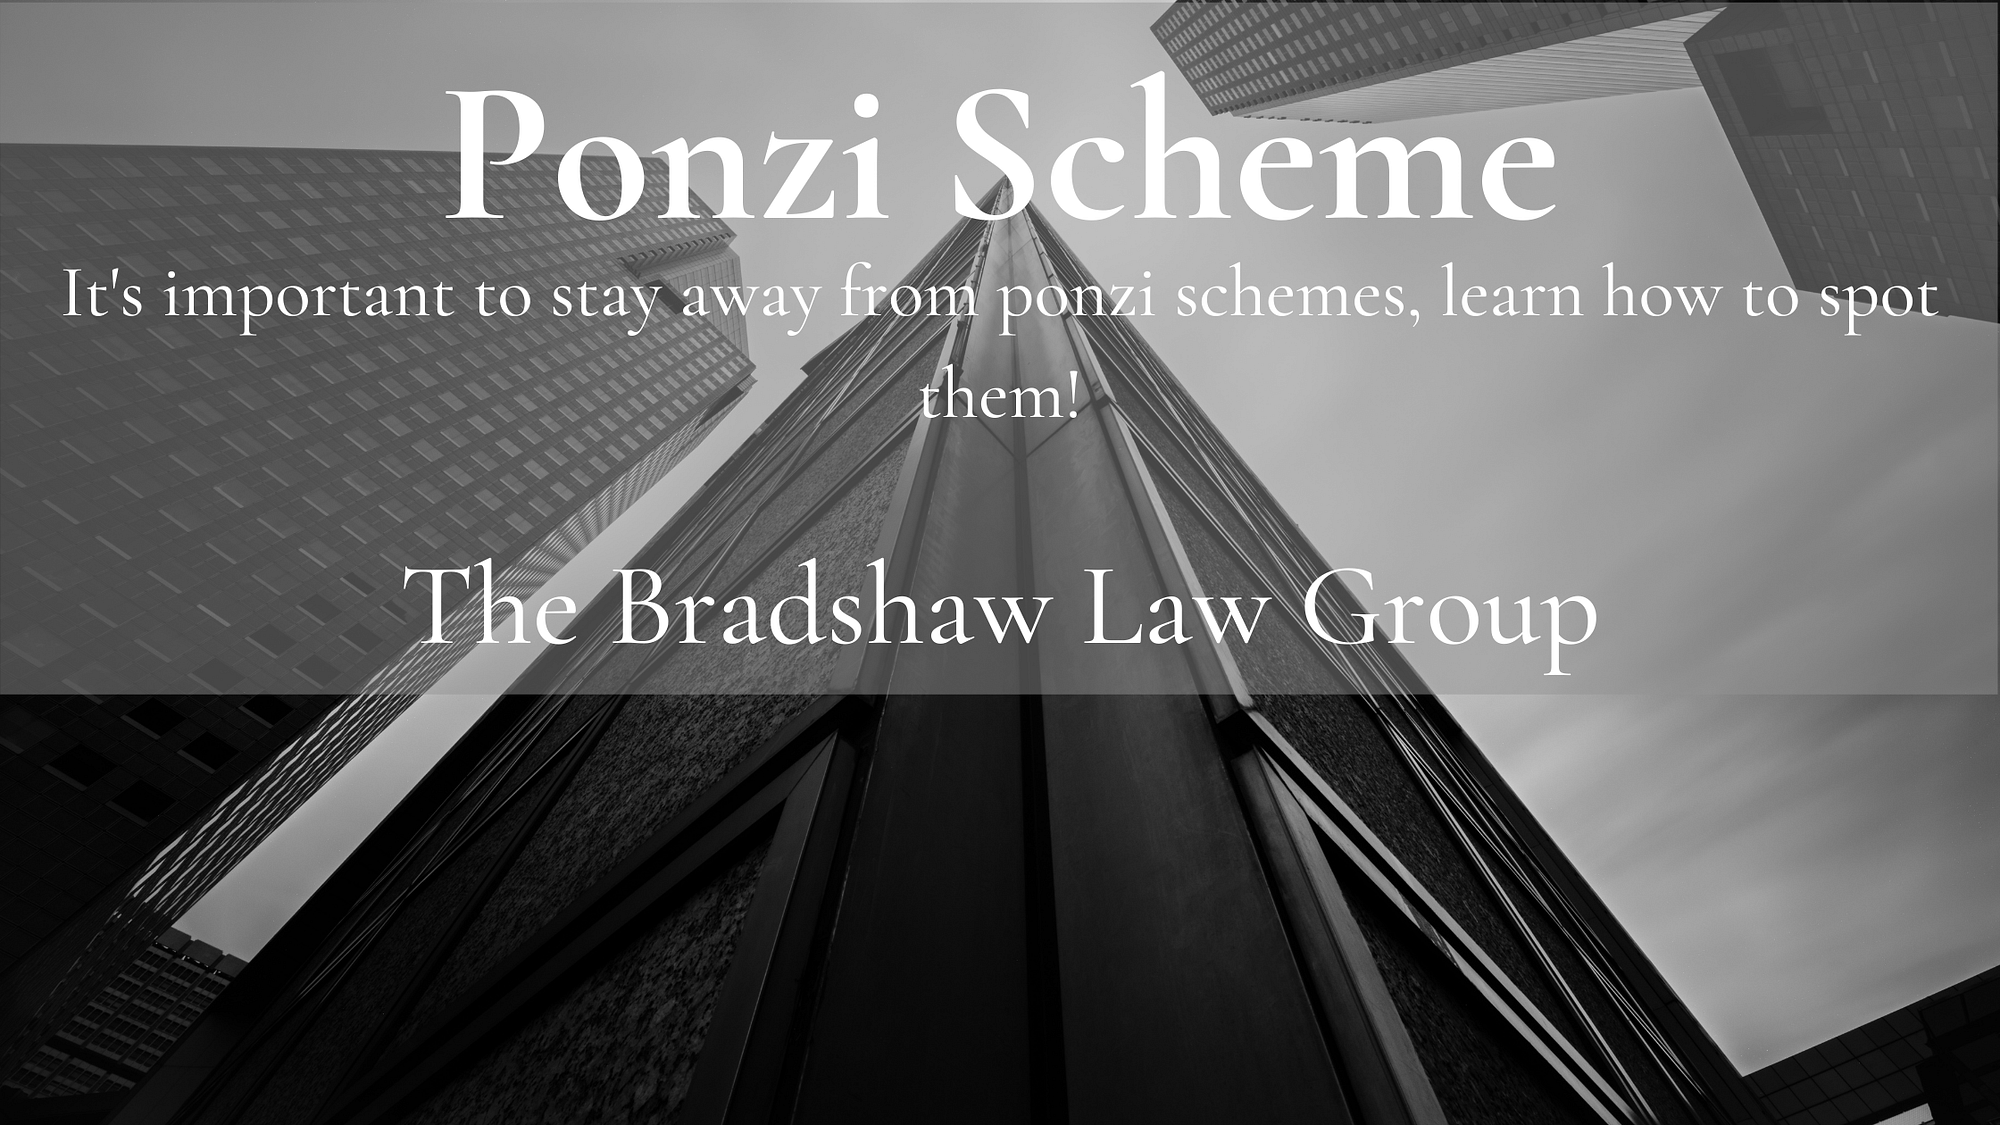 Ponzi Scheme Articles - Don't Fall Victim!